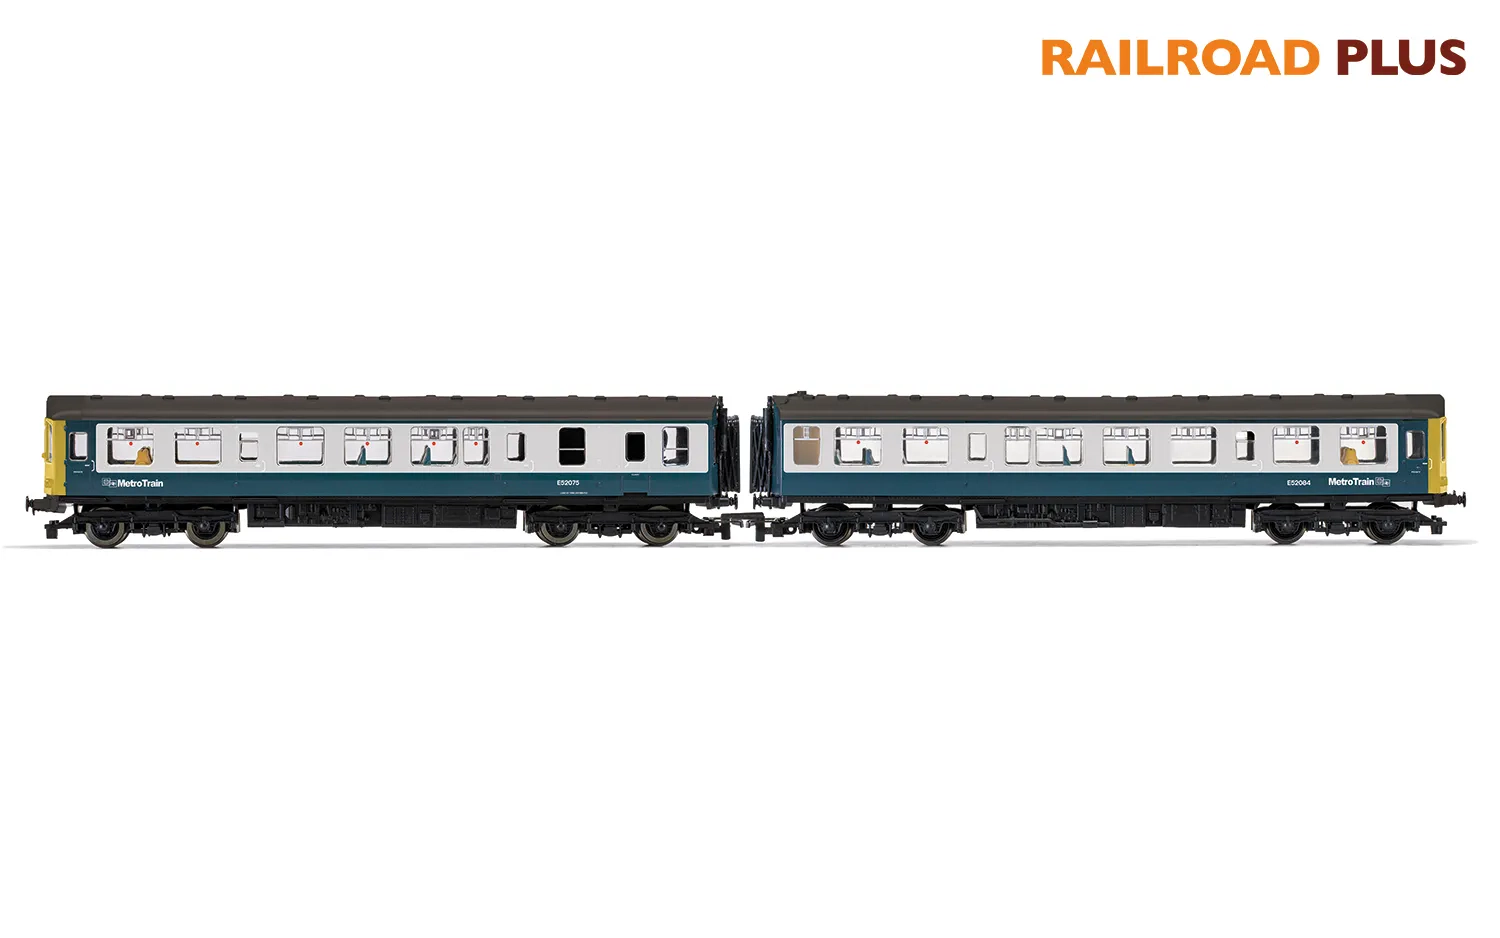 RailRoad Plus MetroTrain Class 110 2 Car Train Pack E52075 - Era 7